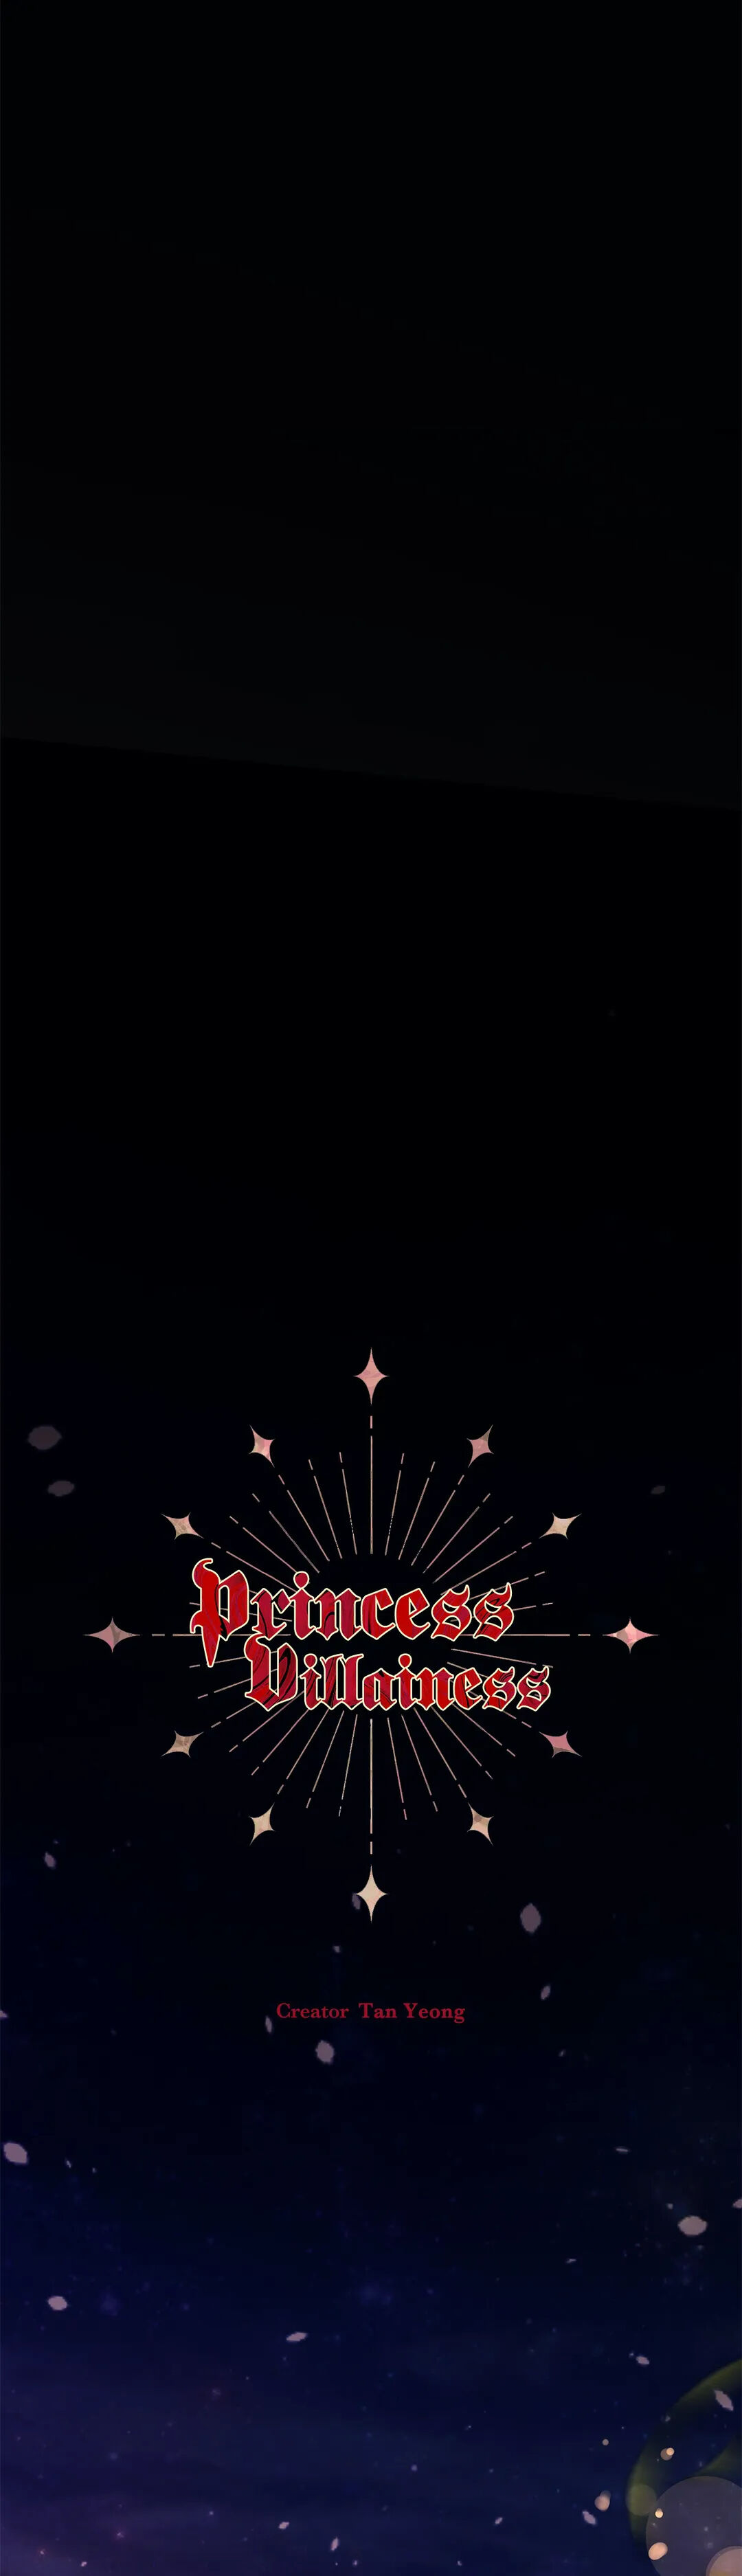 Princess Villainess image